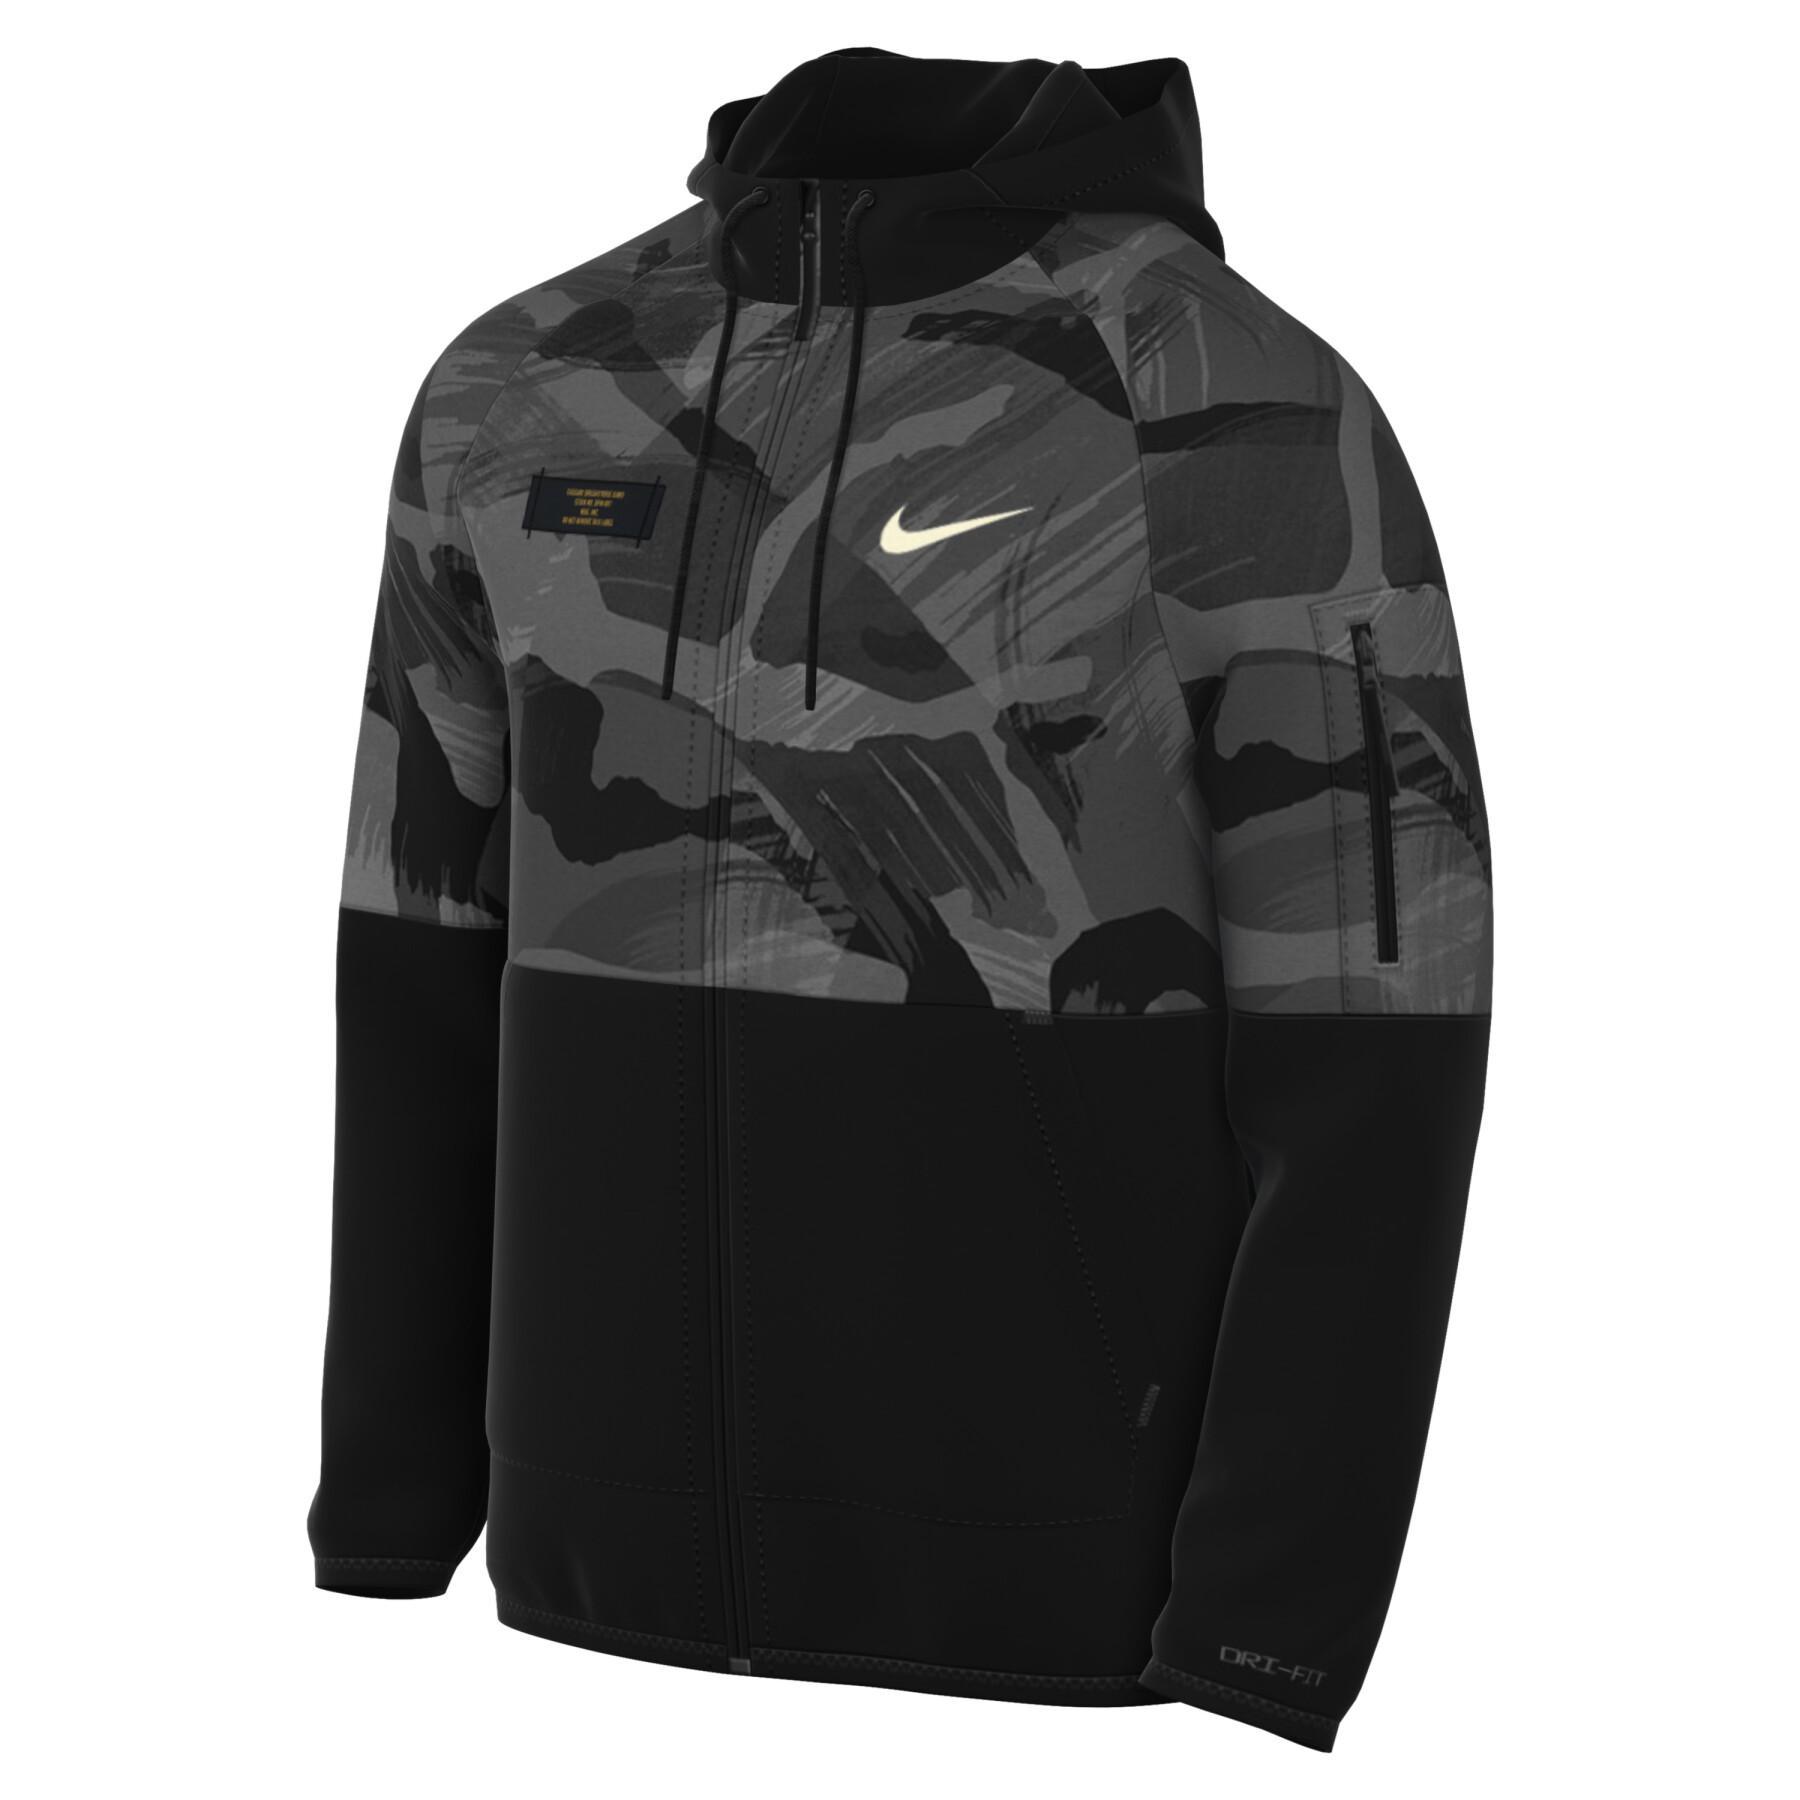 Sweat jacket Nike Dri-FIT Camo